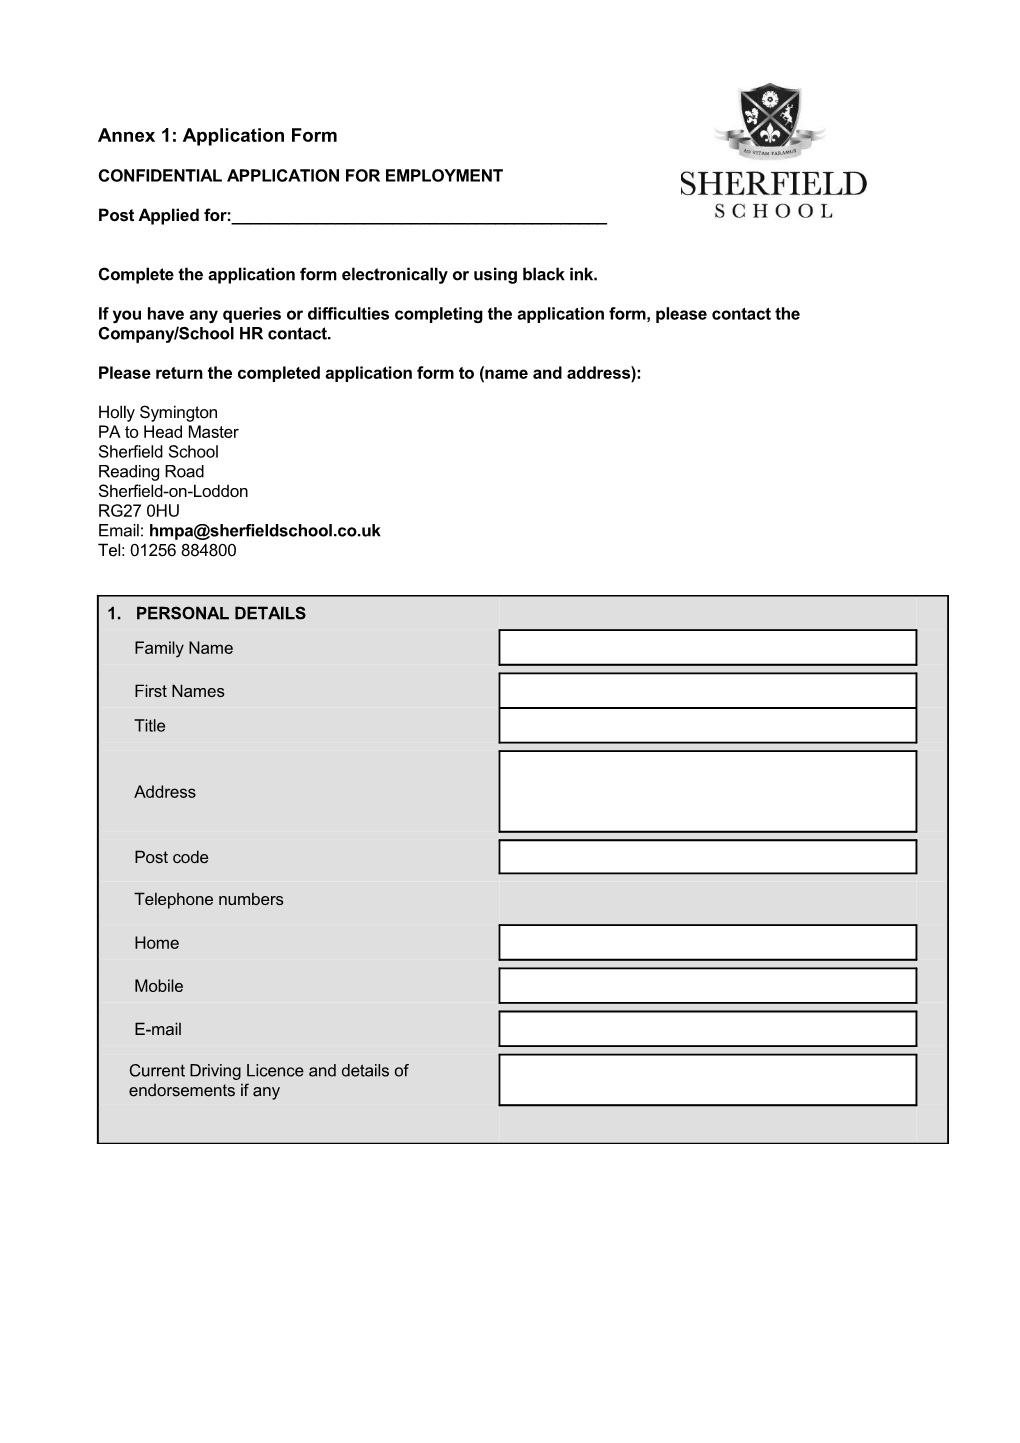 Annex 4: Application Form